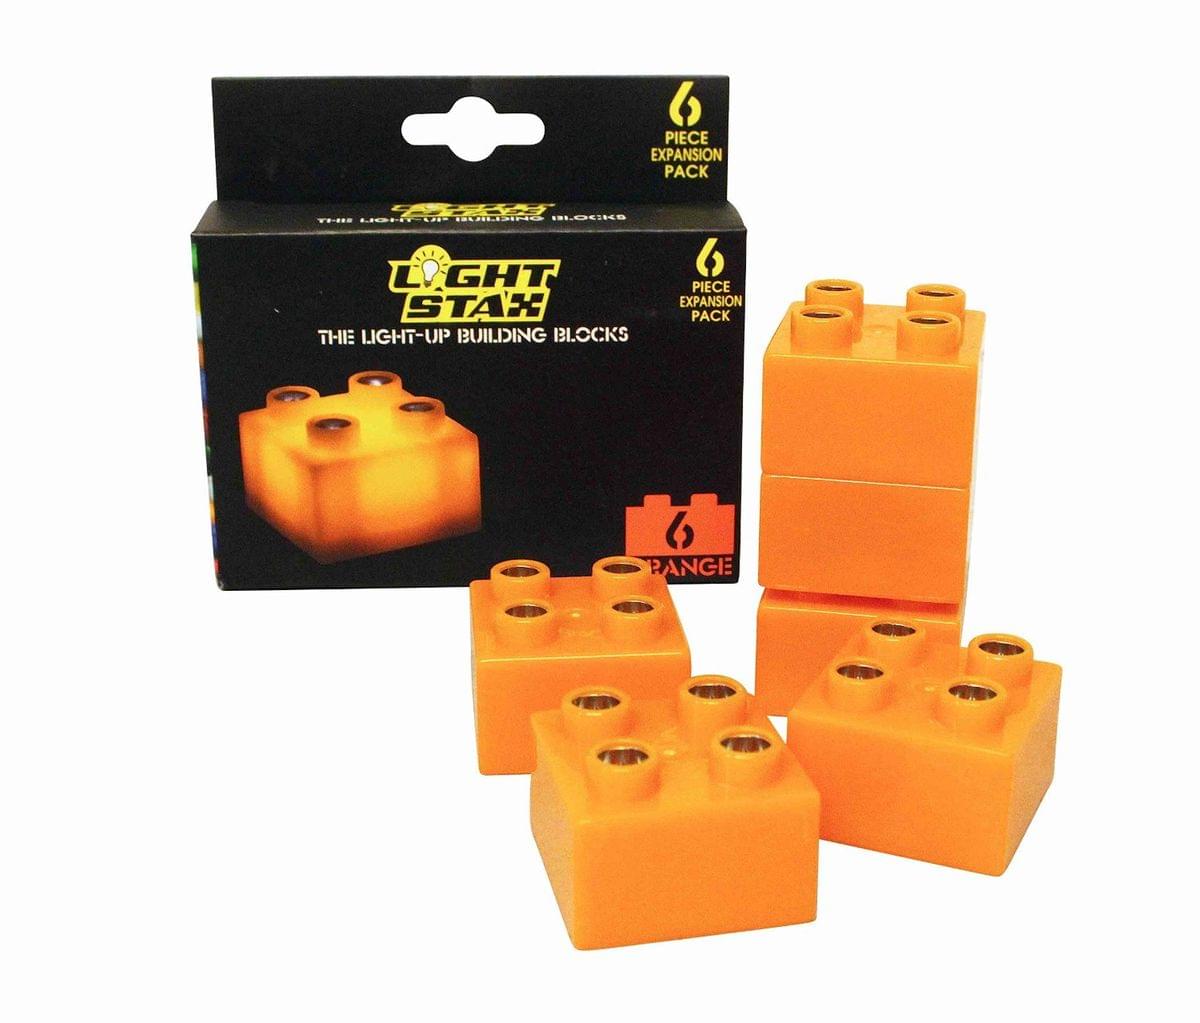 Light Stax LED Light-Up Building Blocks 6-Piece Expansion Pack: Orange